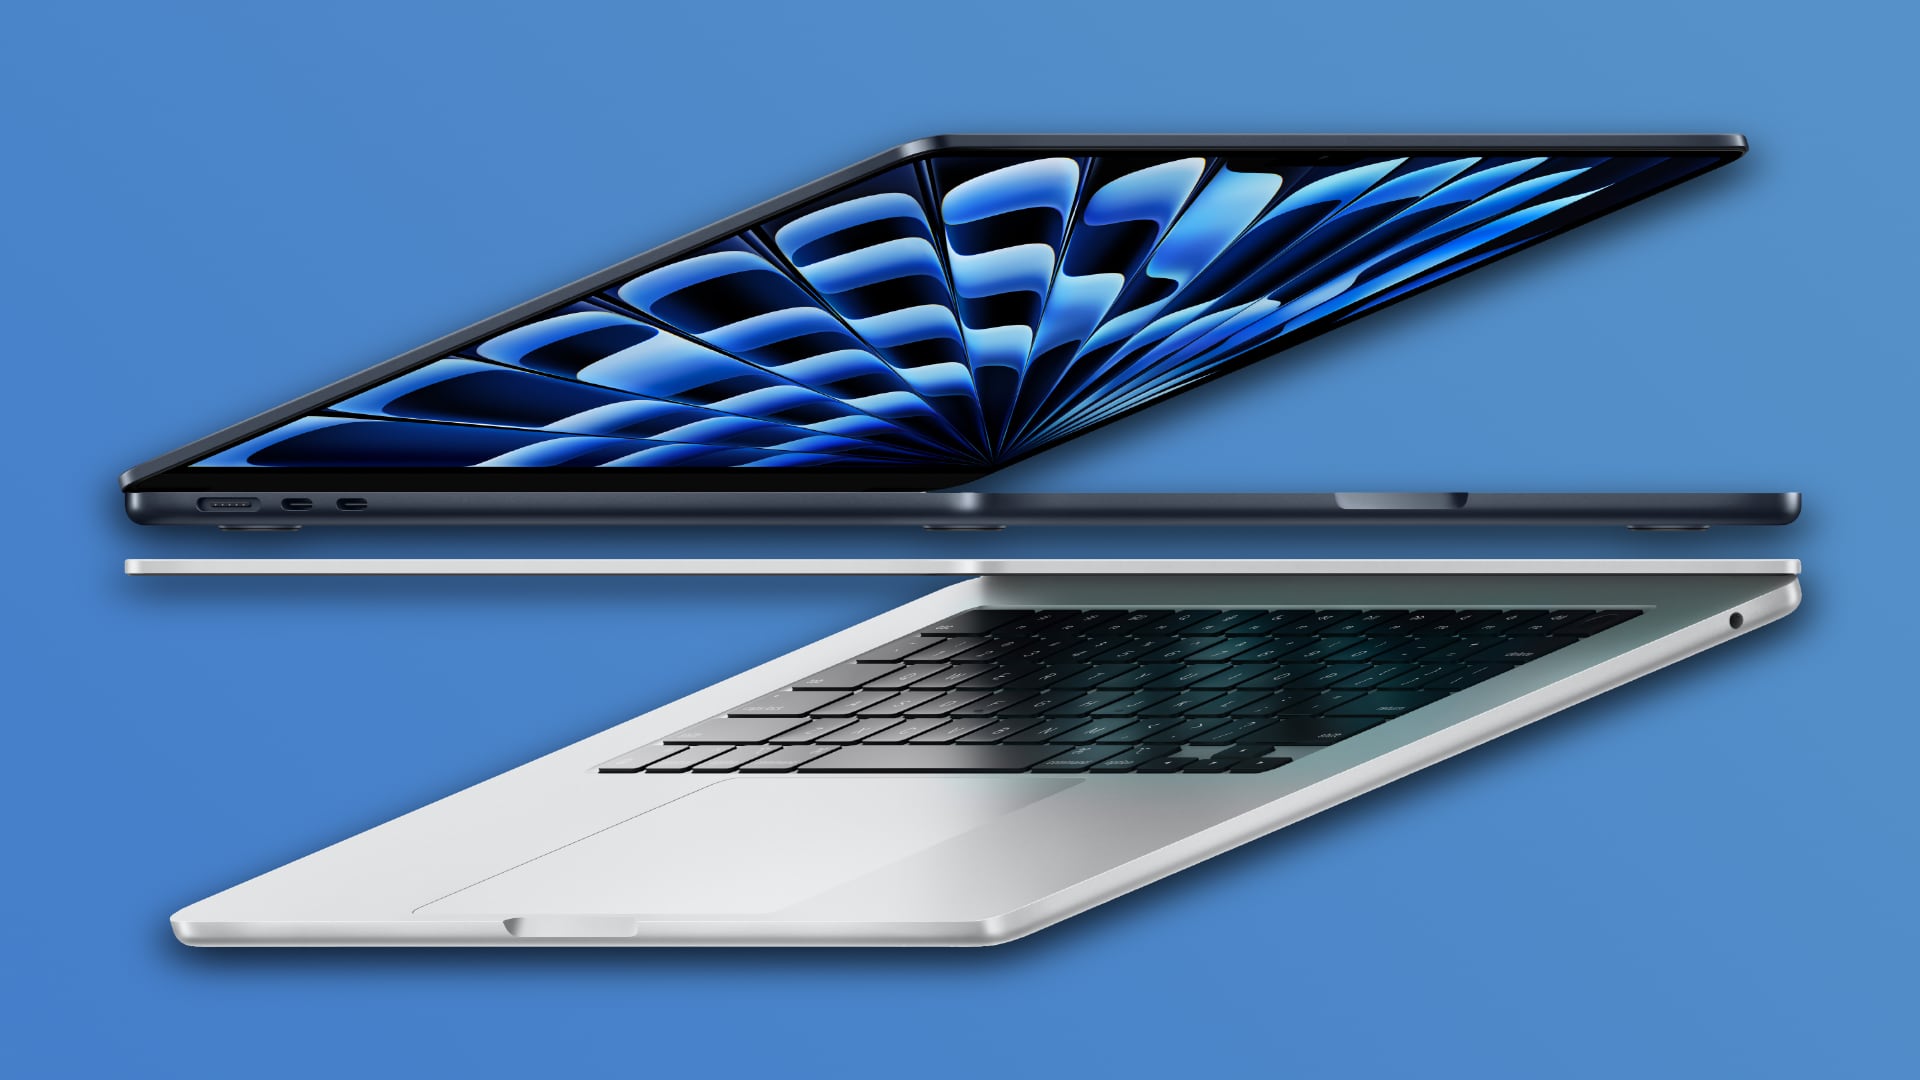 256GB M3 MacBook Air has faster flash storage than the M2 predecessor